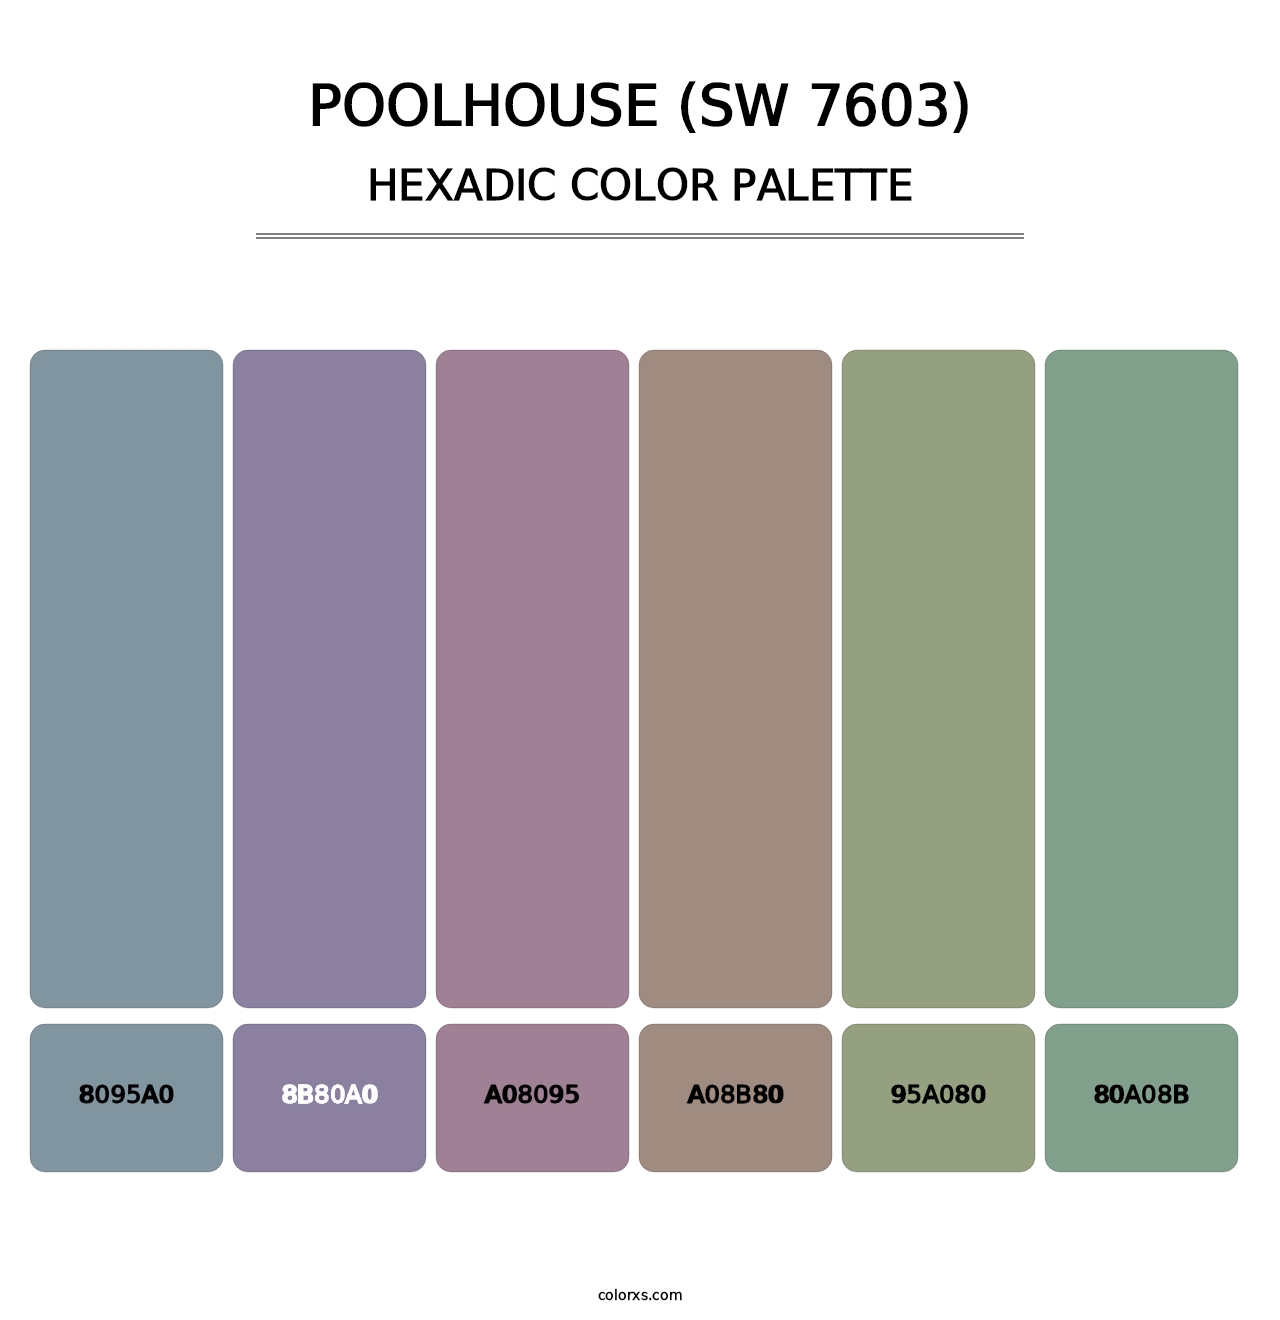 Poolhouse (SW 7603) - Hexadic Color Palette